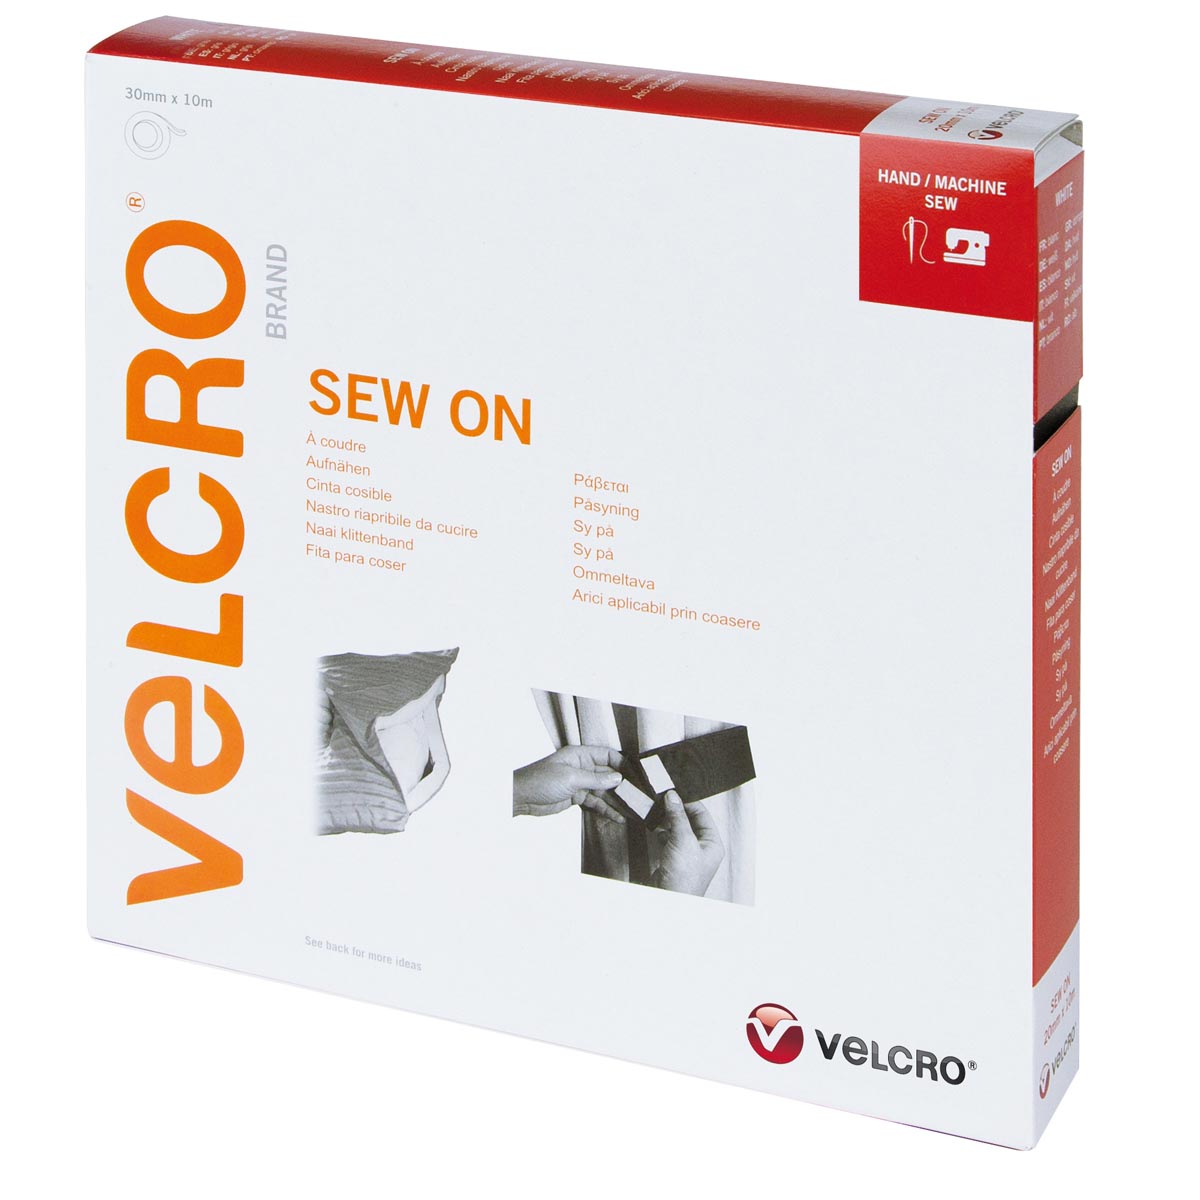 VELCRO® Brand Sew-on 10m x 30mm tape WHITE